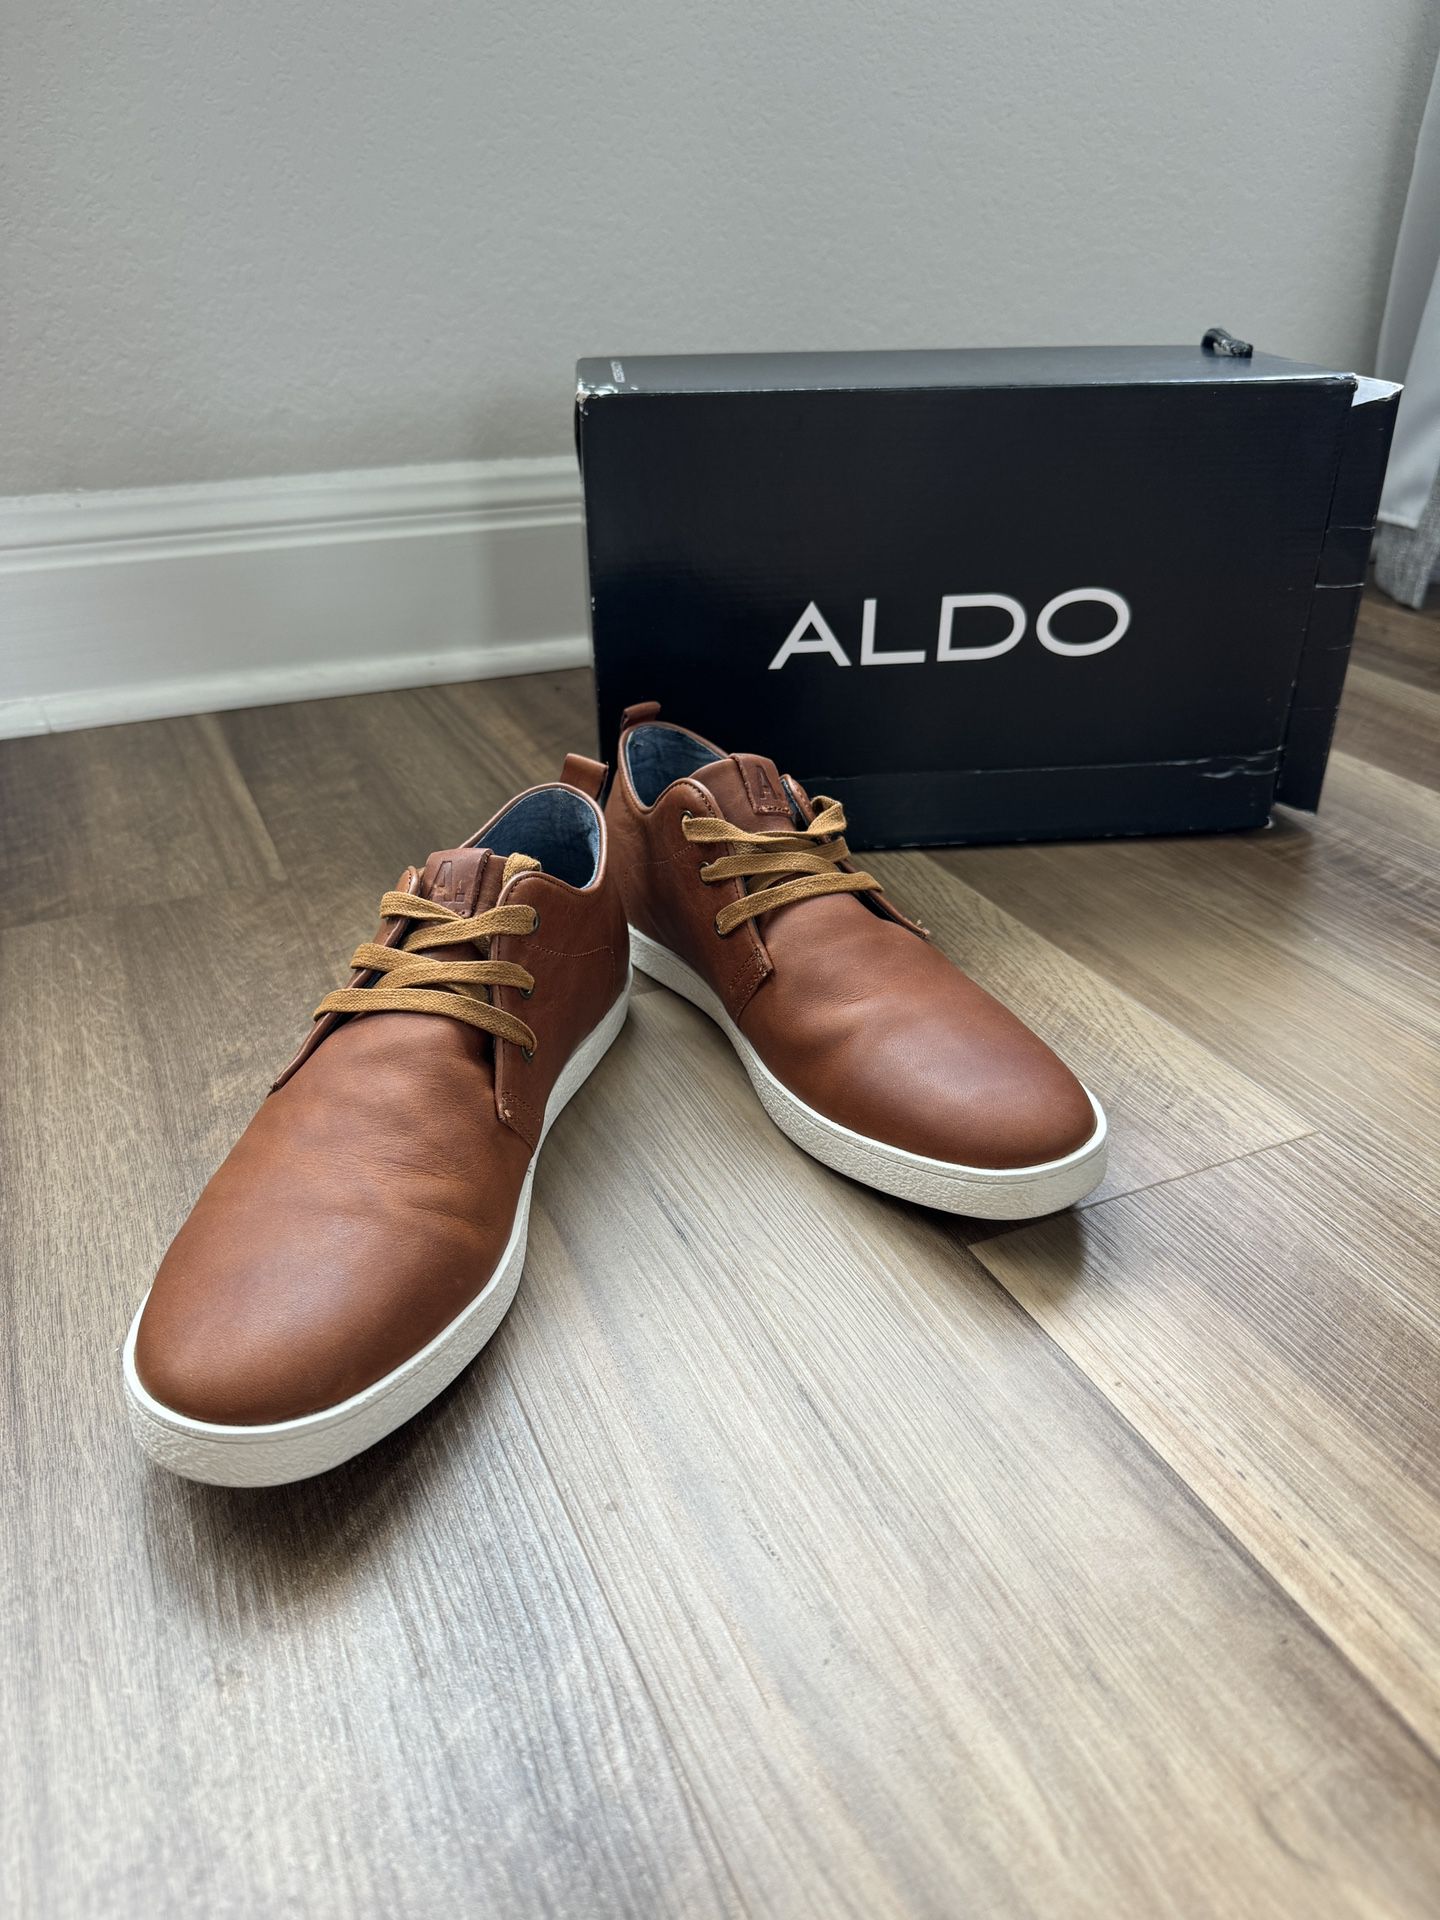 Aldo Men's Summer Dress Shoes